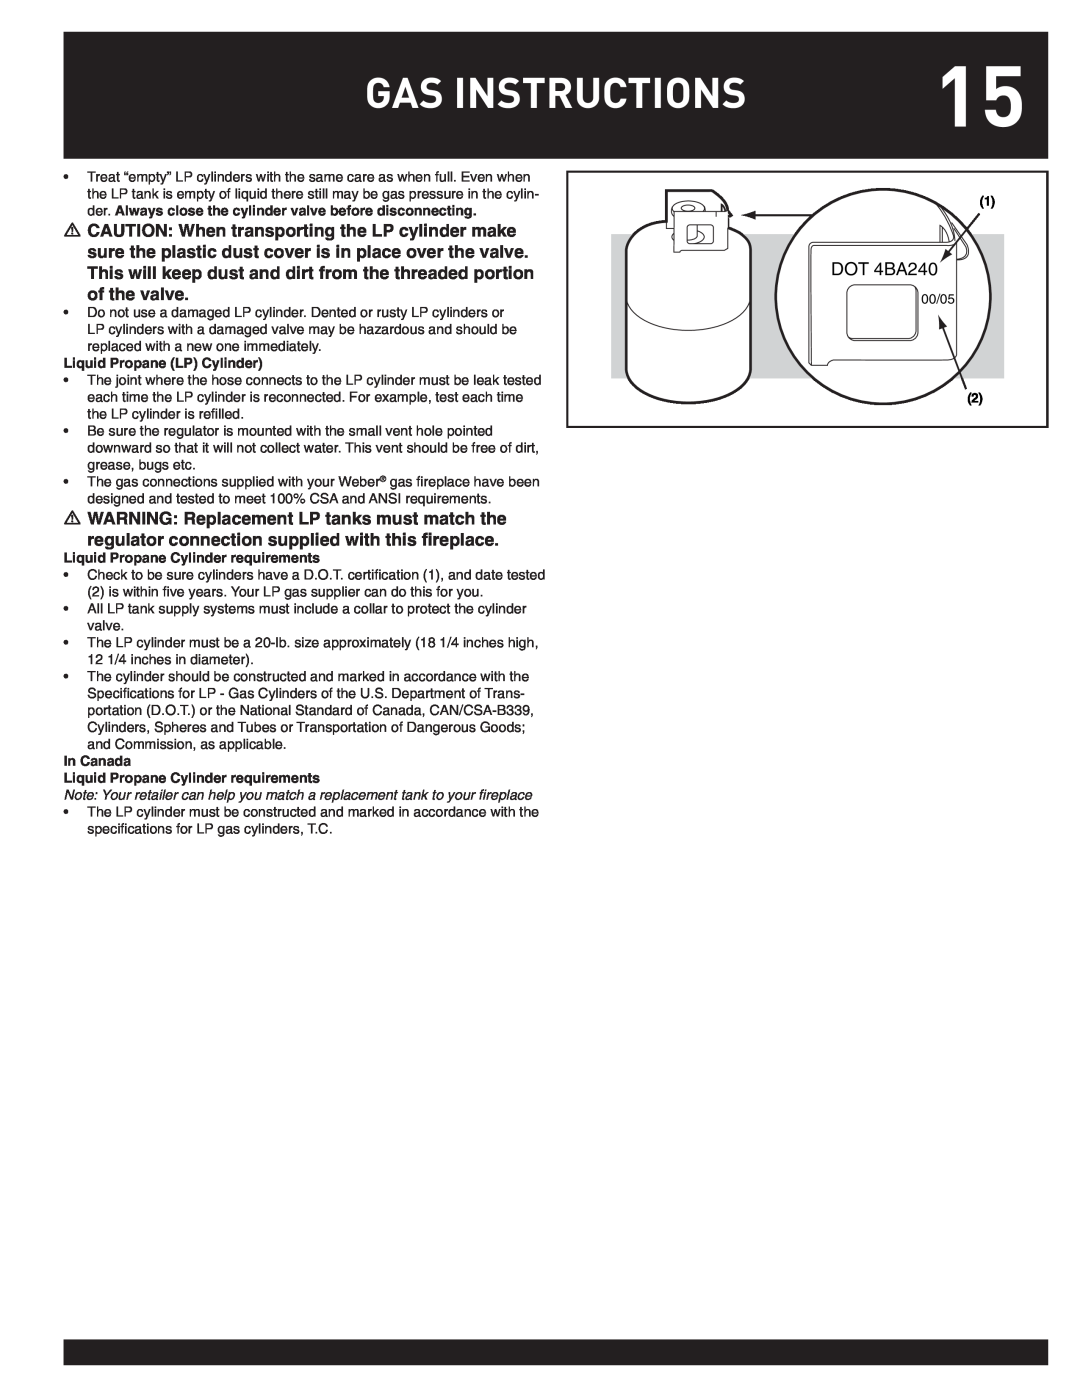 Weber #43028 manual Gas Instructions, DOT 4BA240, Liquid Propane LP Cylinder, Liquid Propane Cylinder requirements 